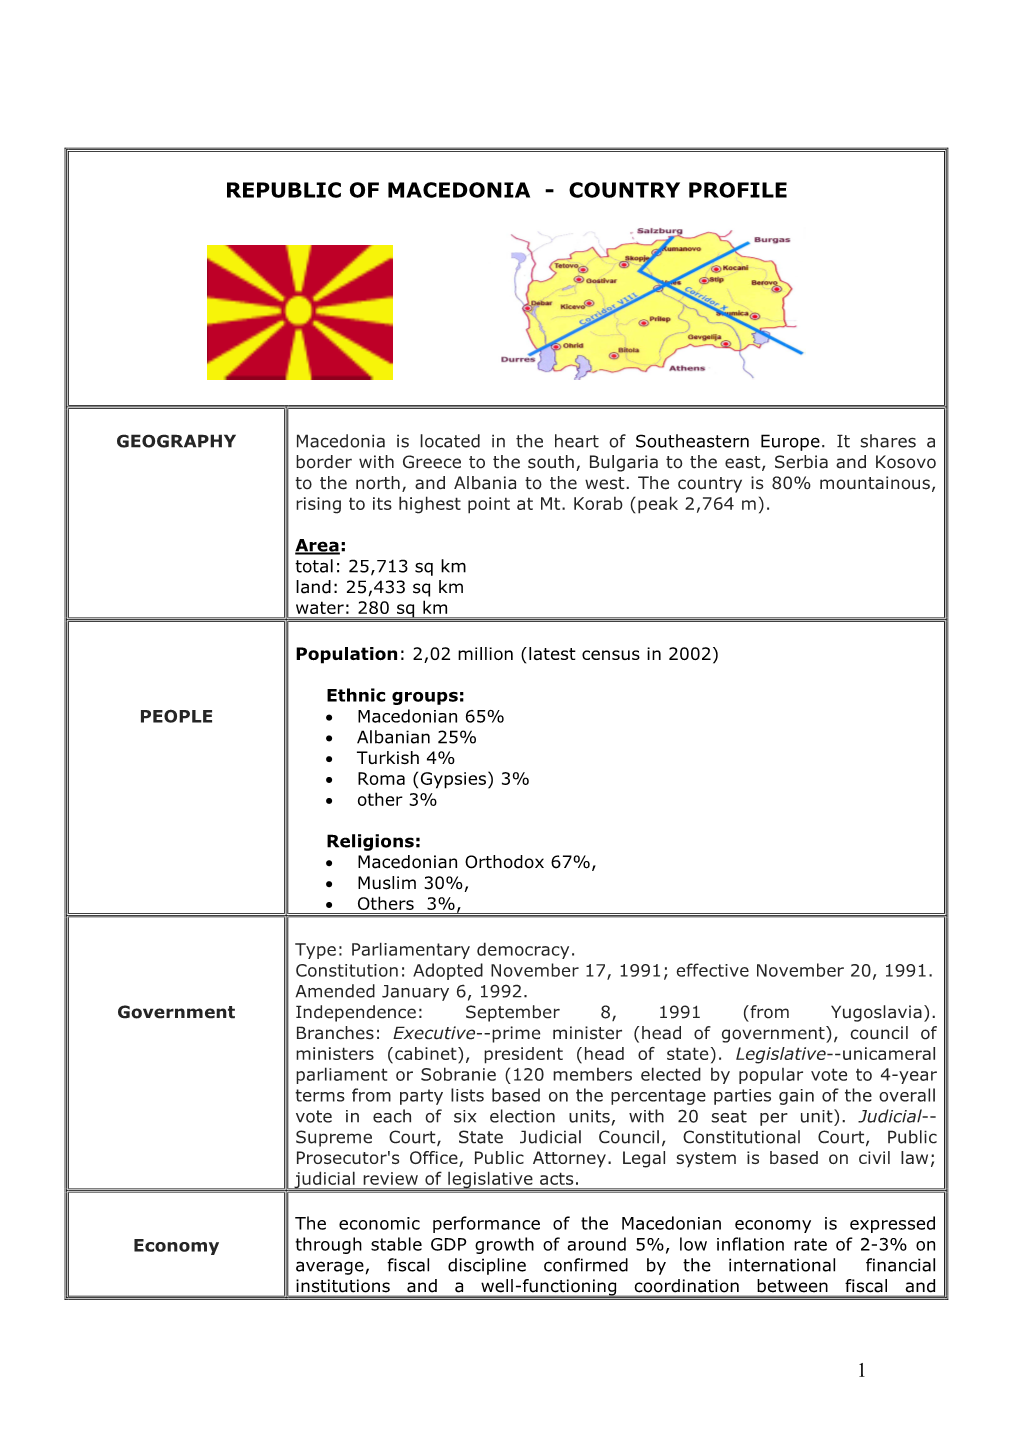 Republic of Macedonia - Country Profile